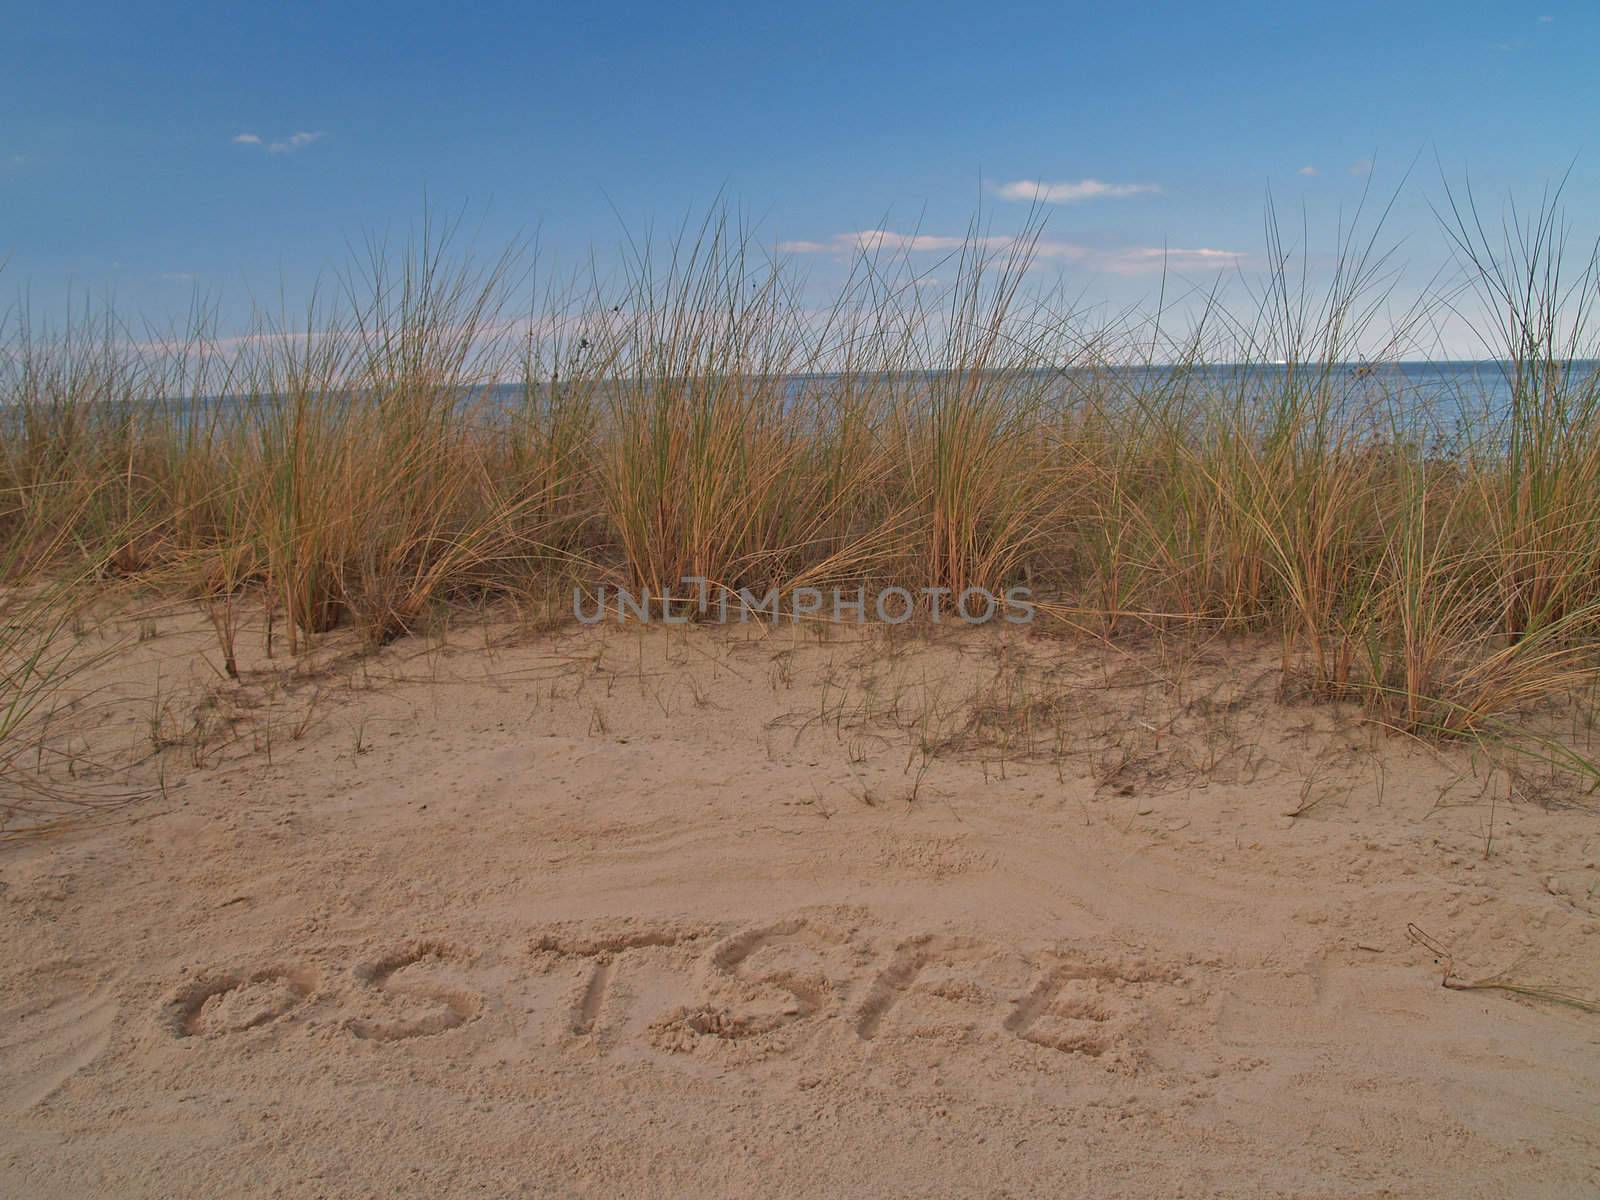 Ostsee, Baltic Sea, drawn on sand on the island Usedom, Germany
